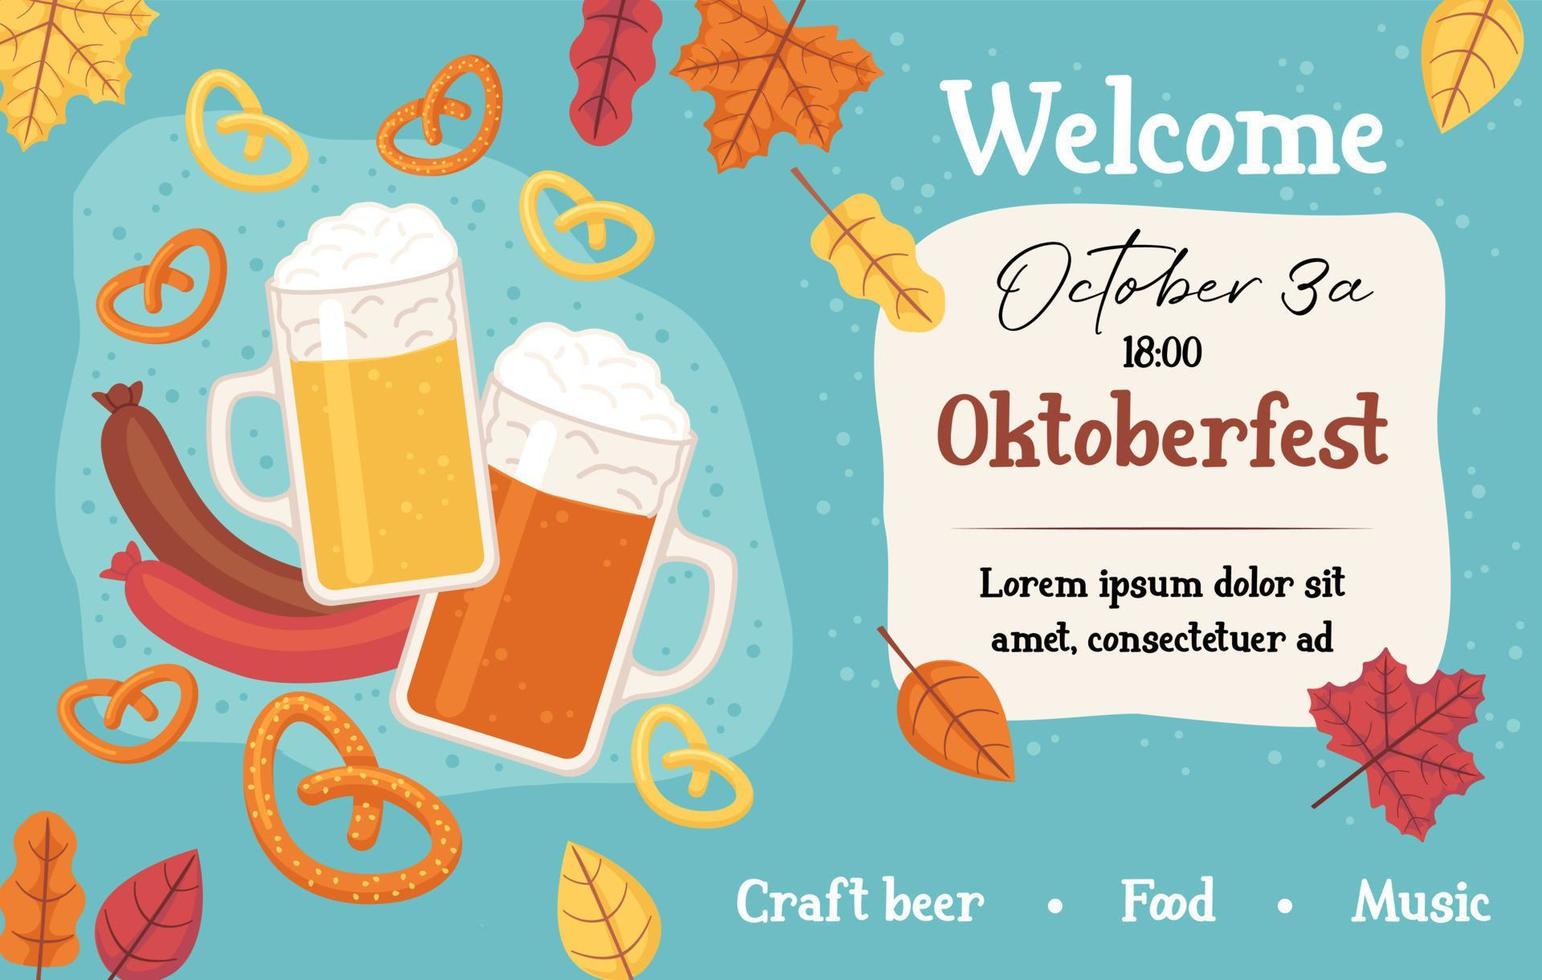 Oktoberfest web template. Beer festival celebration. Stock vector illustration in flat cartoon style